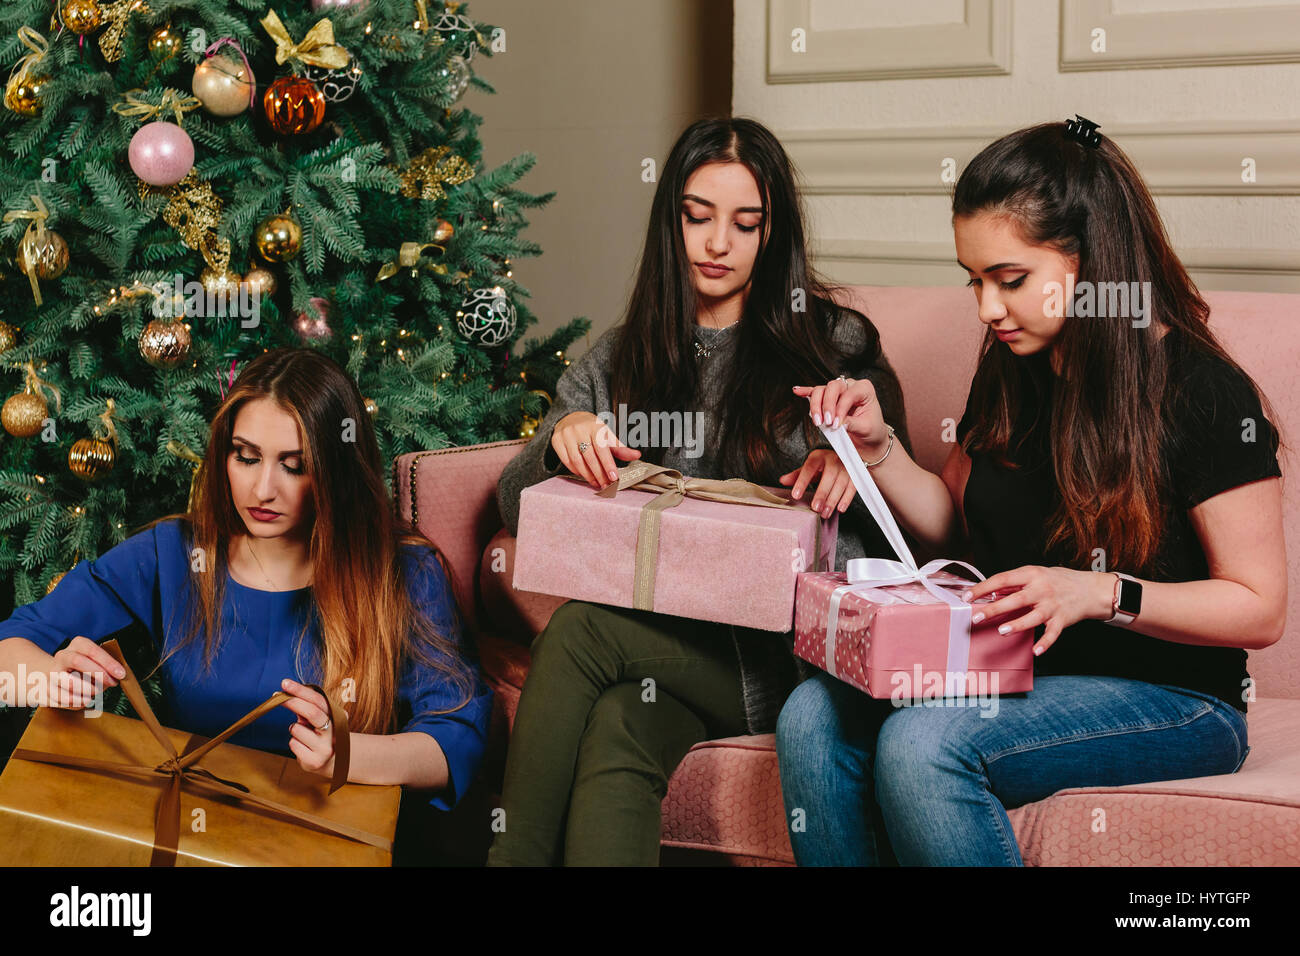 Three beautiful young girls unpack gifts near a Christmas tree. Studio horizontal portrait. Stock Photo